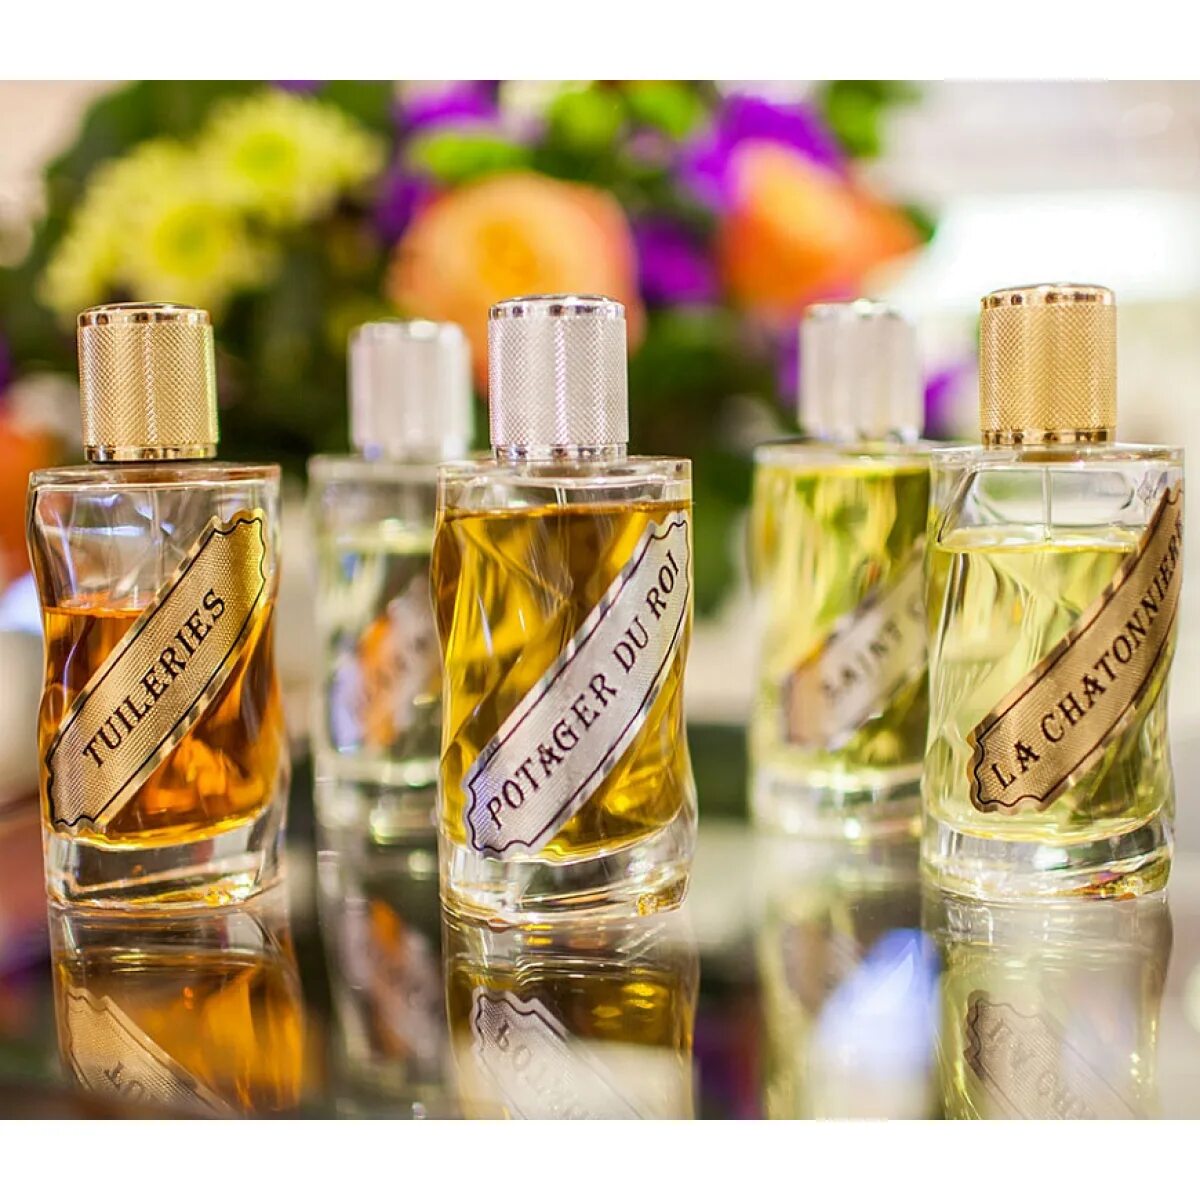 Мастера парфюм. 12 Parfumeurs Francais Madame Royale. 12 Parfumeurs Francais ароматы. 12 Парфюмеров Fontainebleau. 12 Parfumeurs Francais la Ballue, EDP (10 отливант).